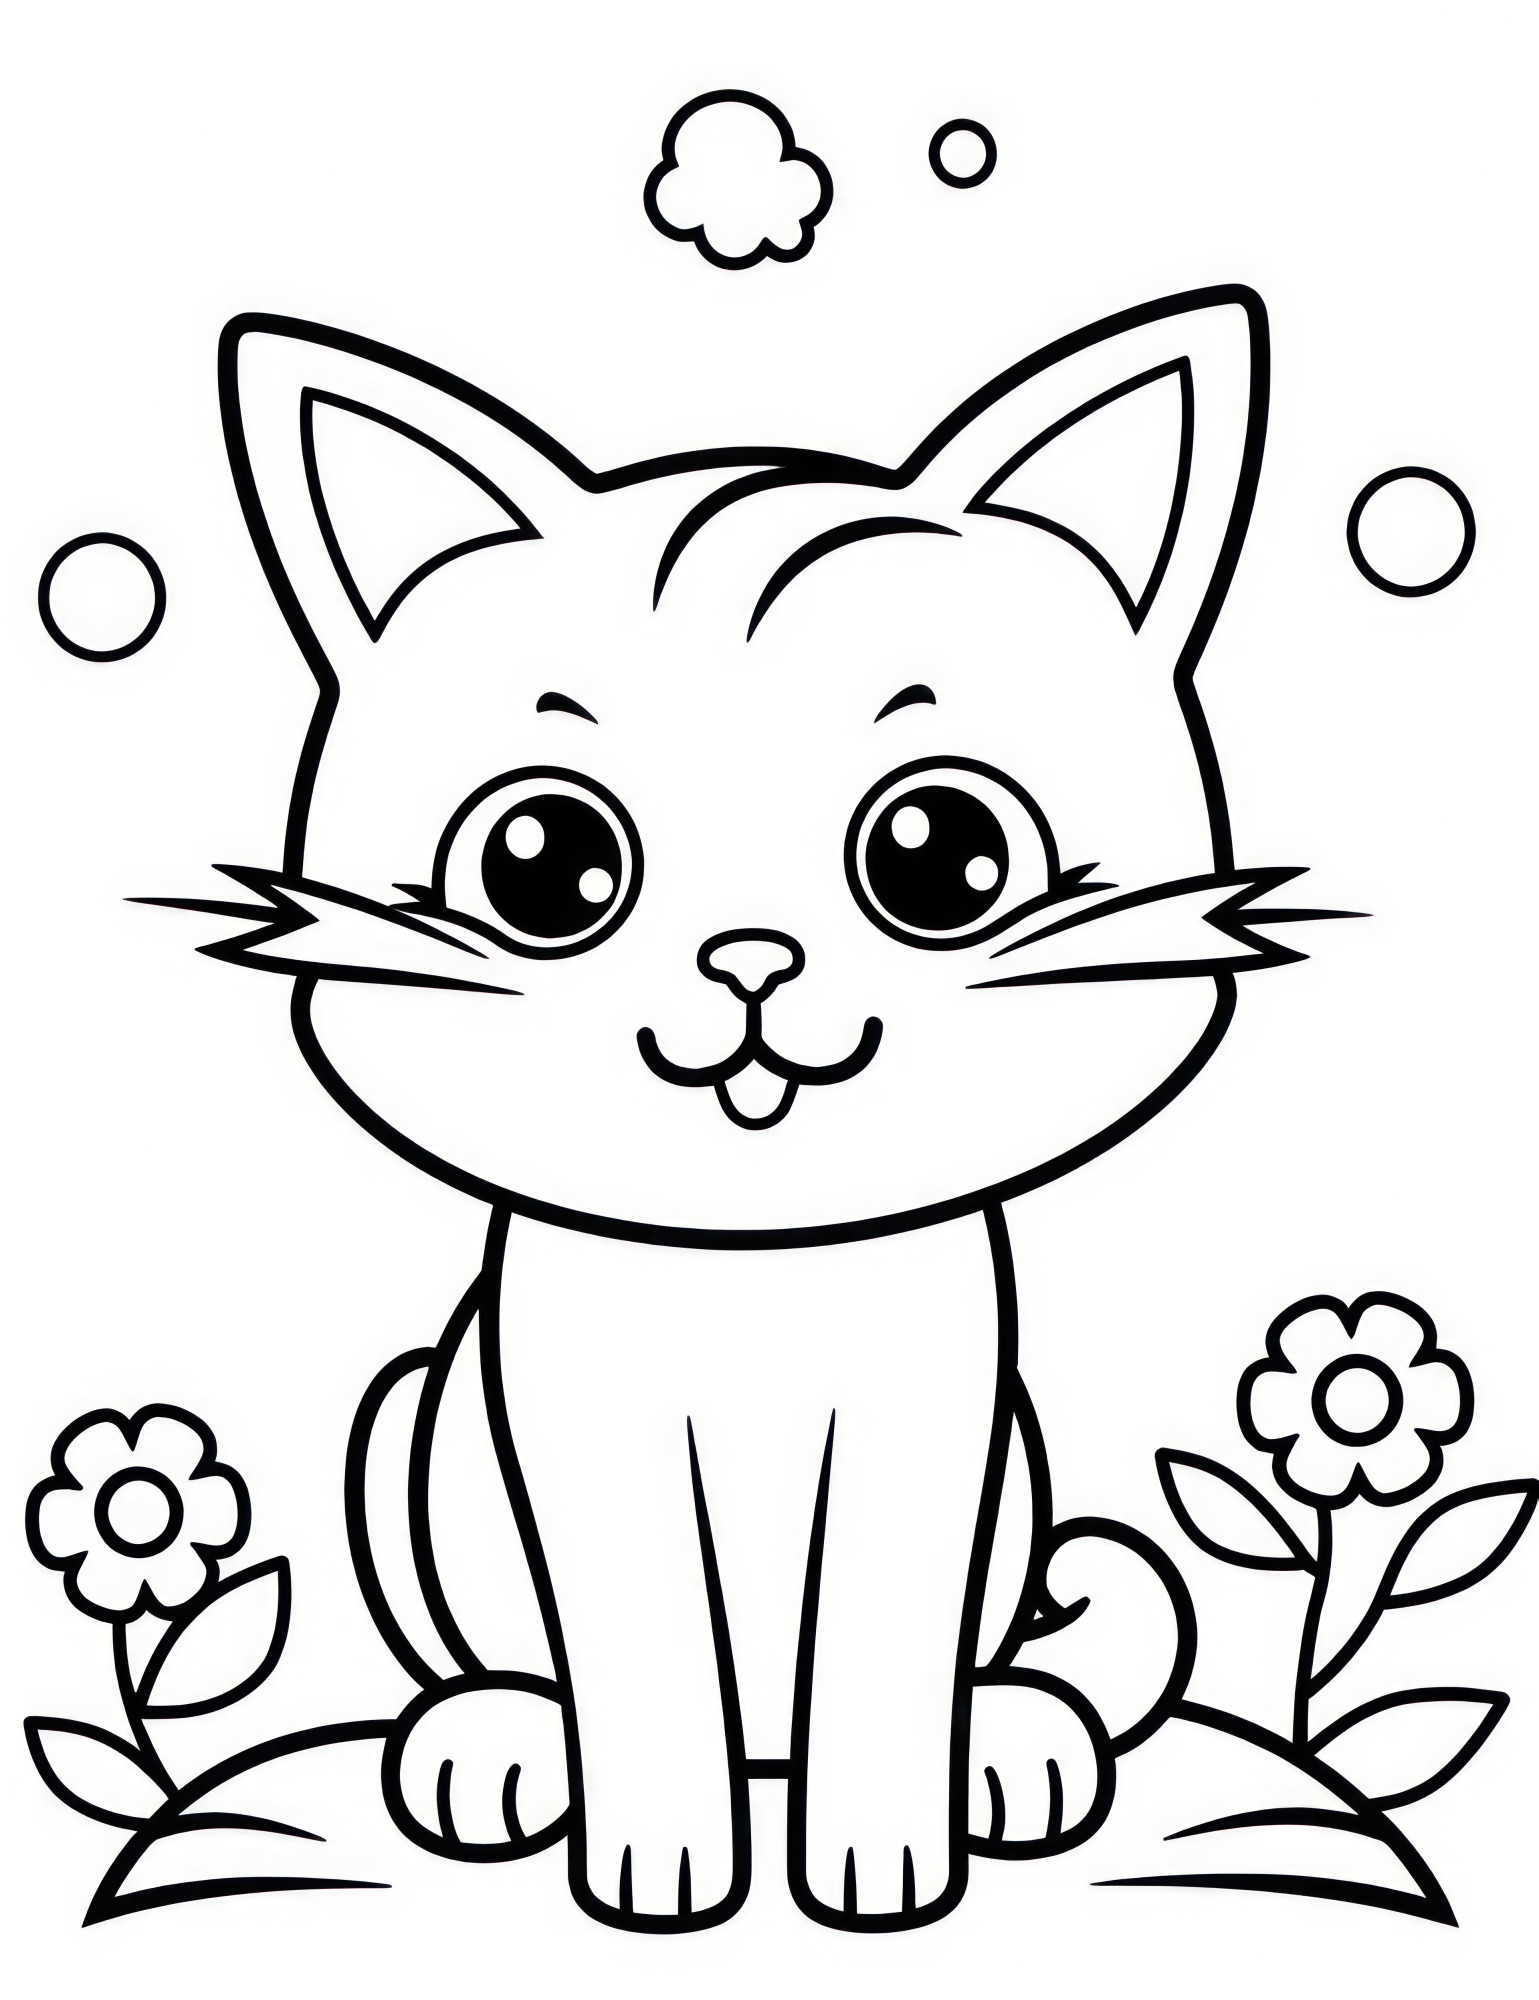 Раскраска для детей: котенок на поляне на фоне цветов